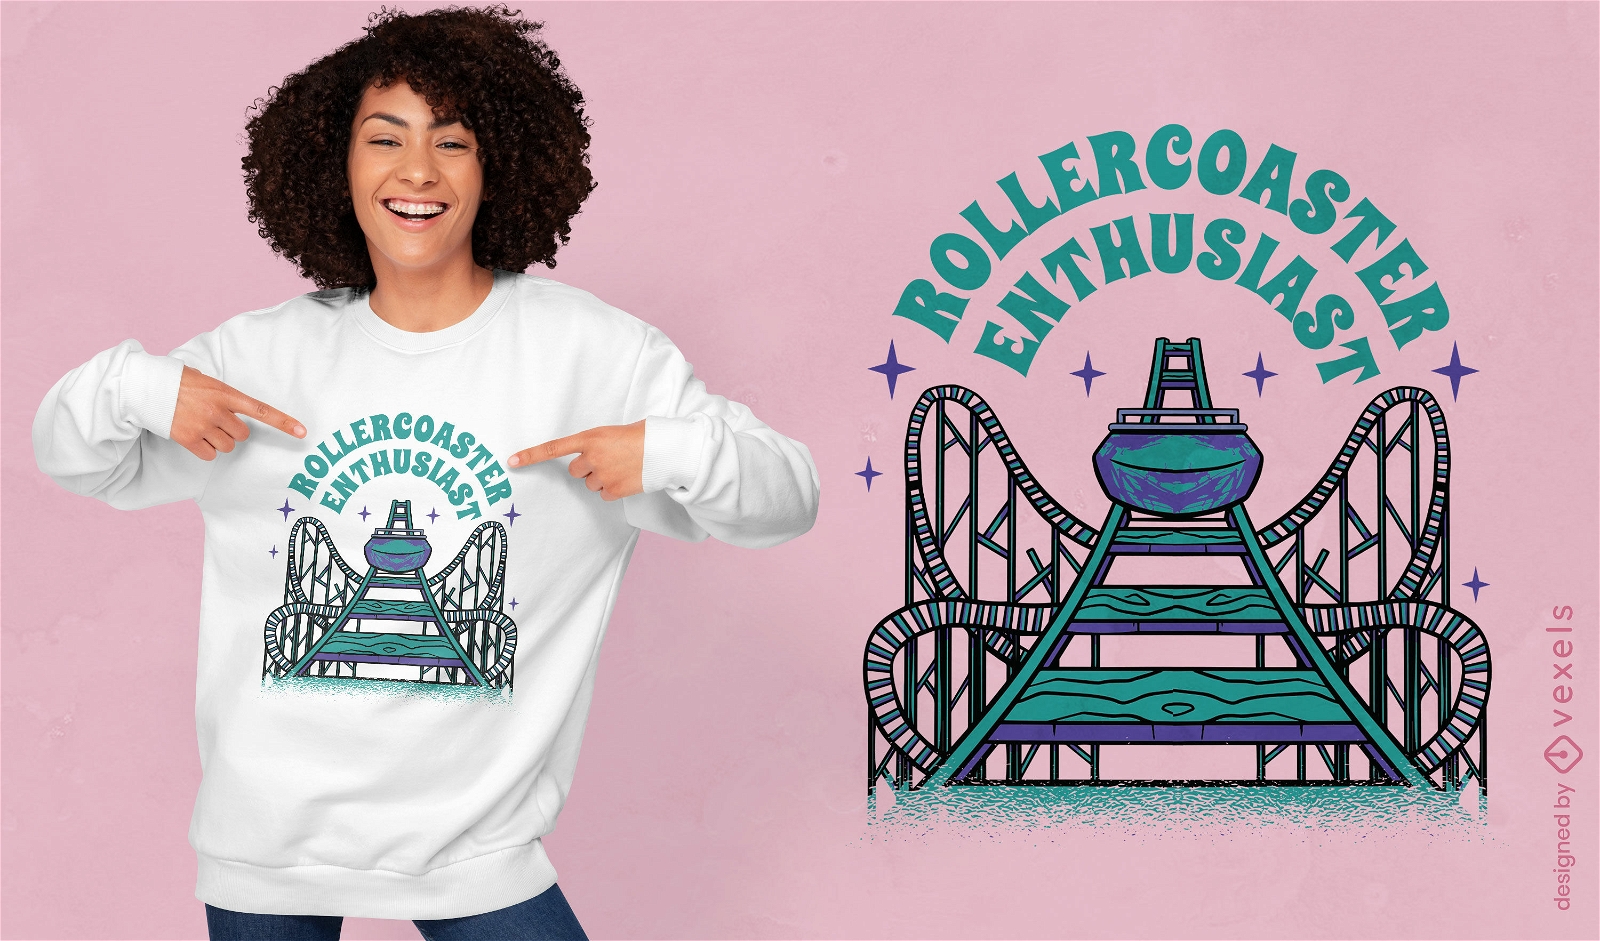 Rollercoaster enthusiast t-shirt design